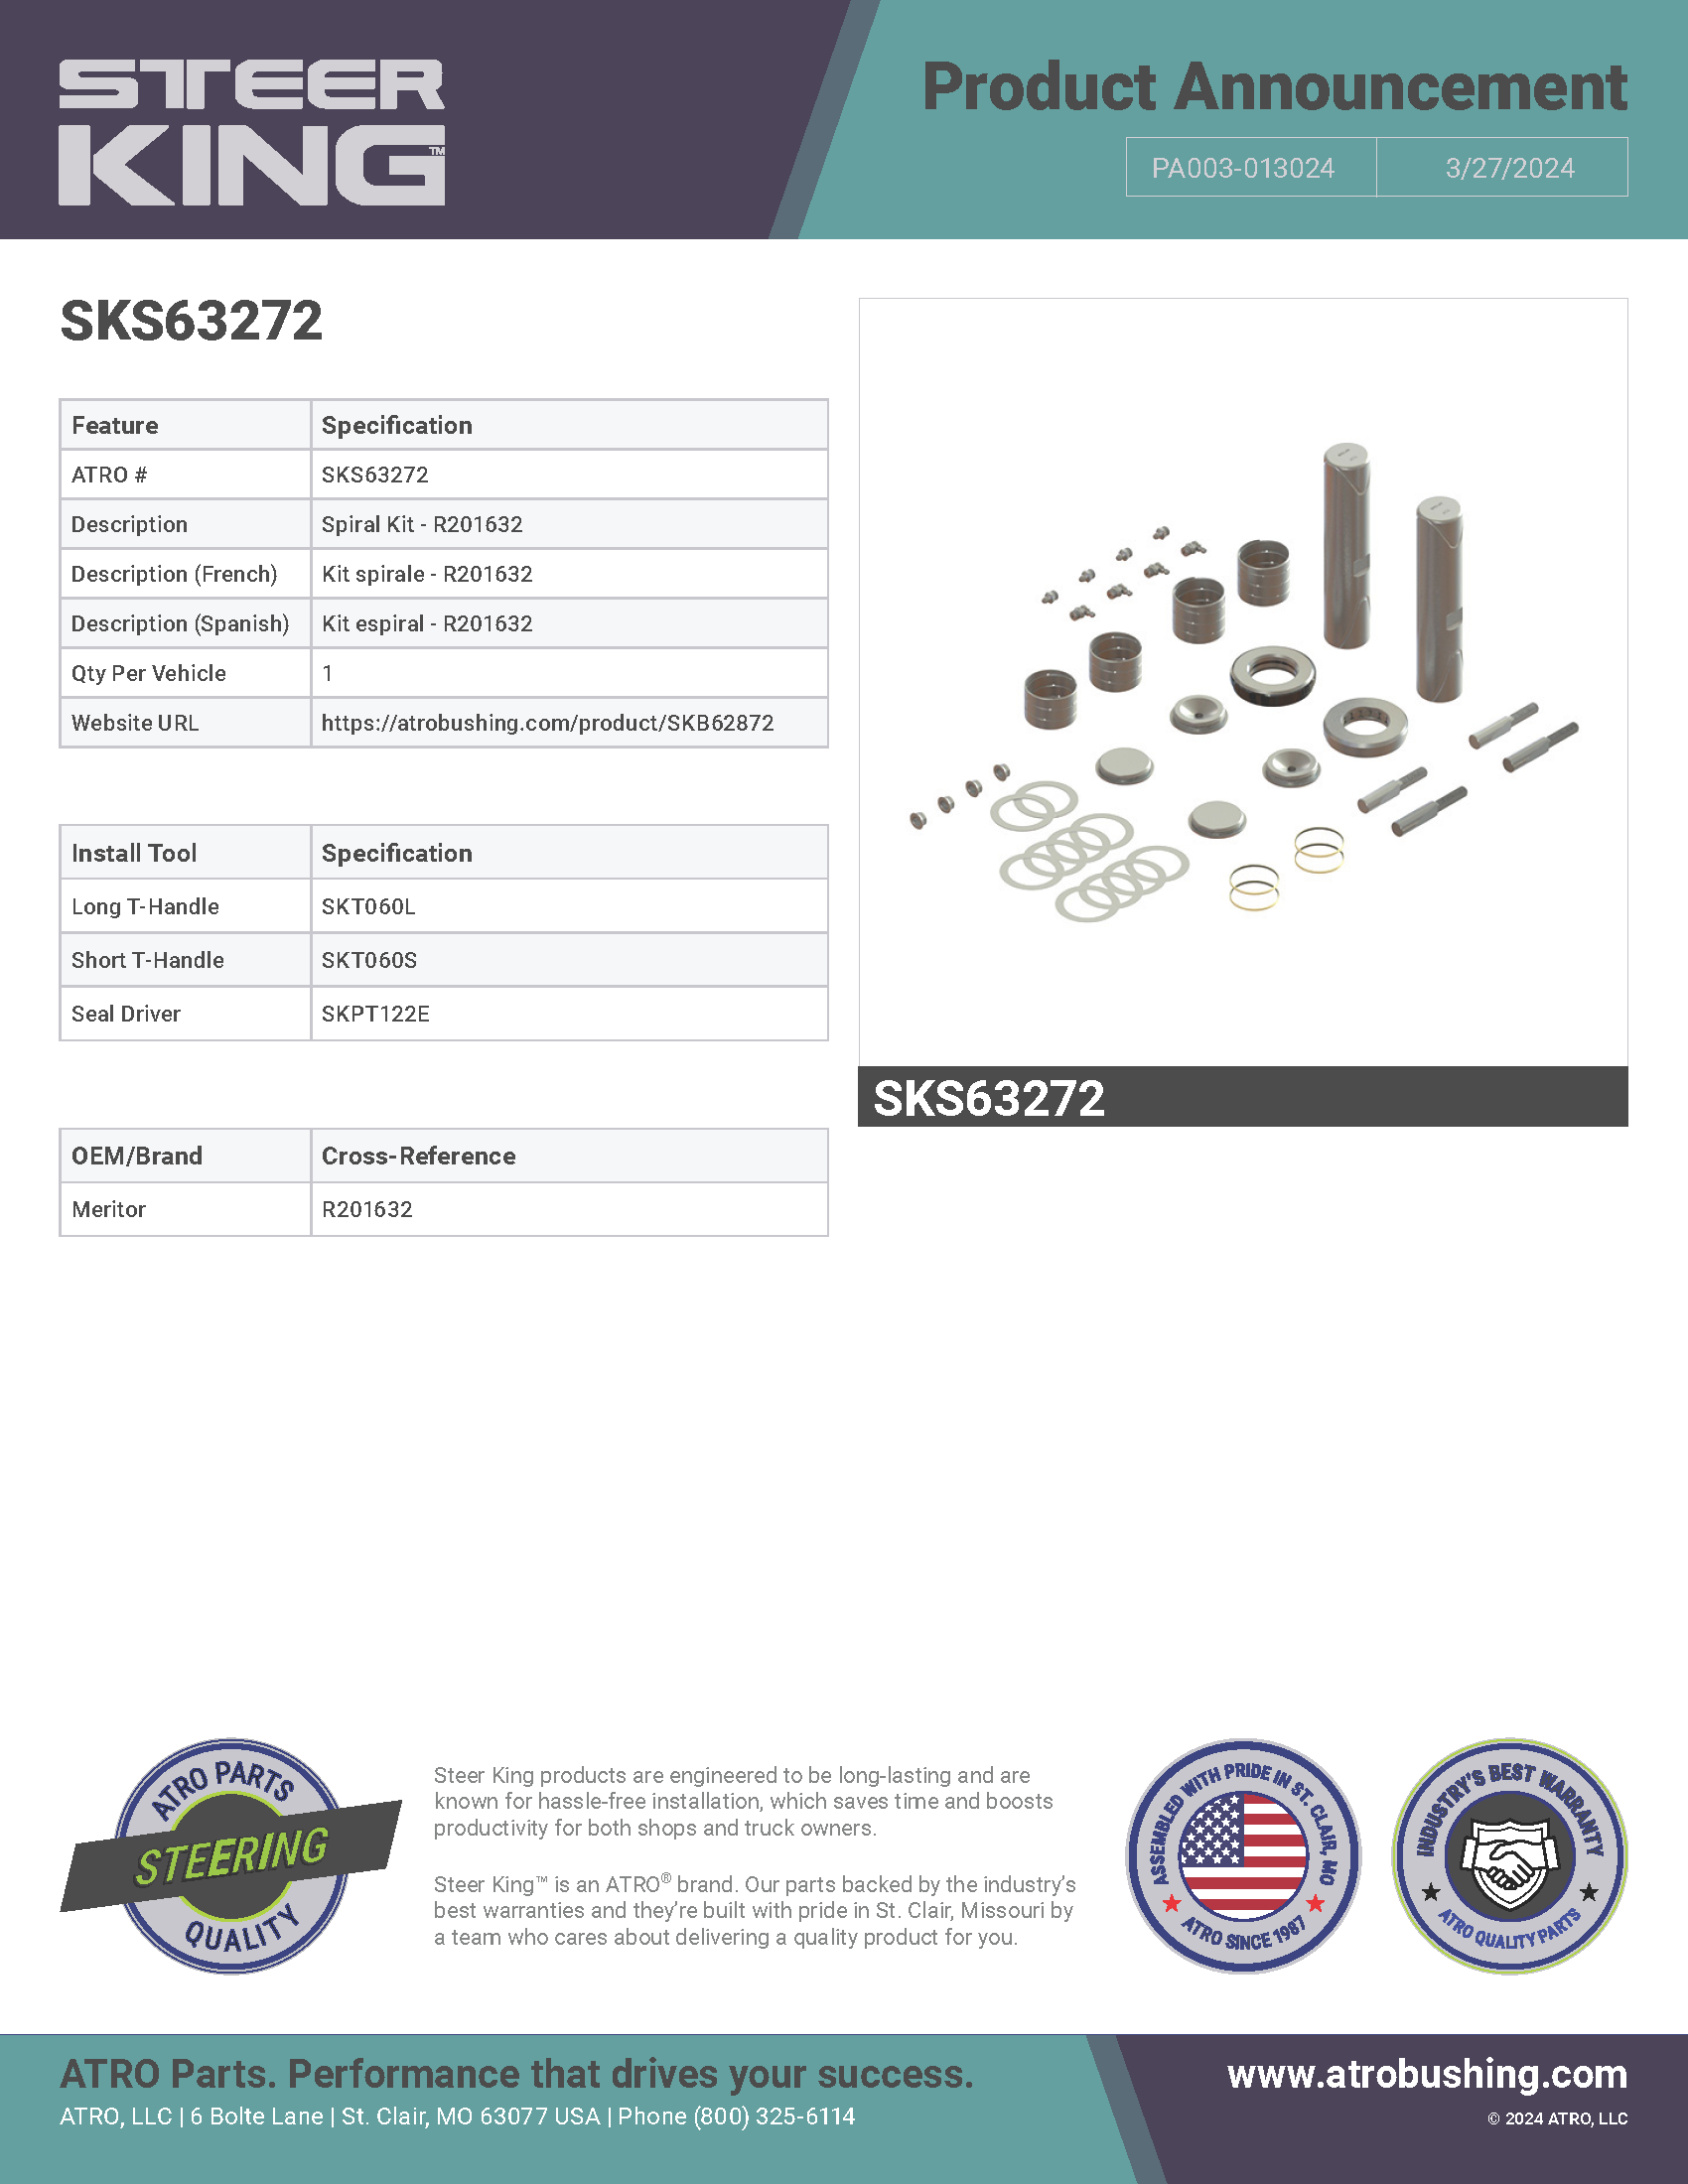 SKS63272 Spiral Kit - R201632 PA003-013024